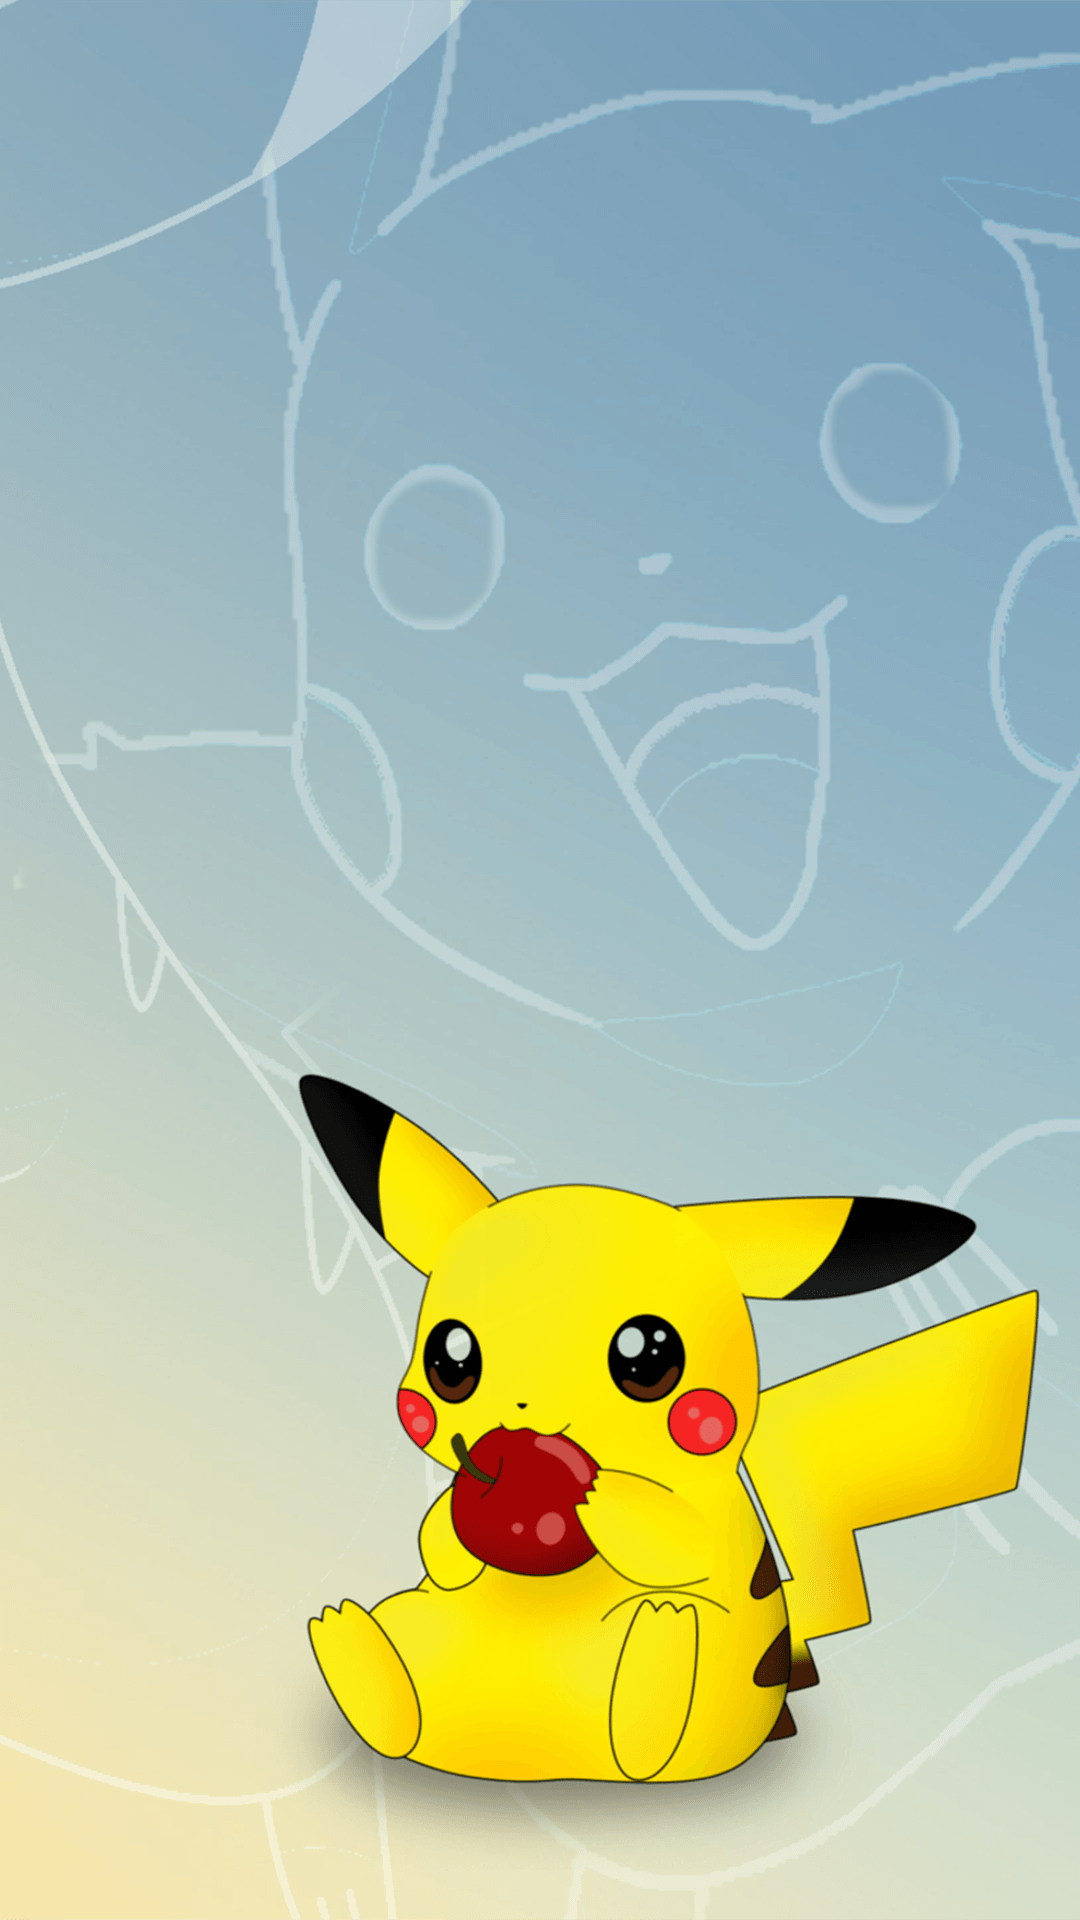 Pikachu iPhone 11 Wallpaper by Jayart7 on DeviantArt